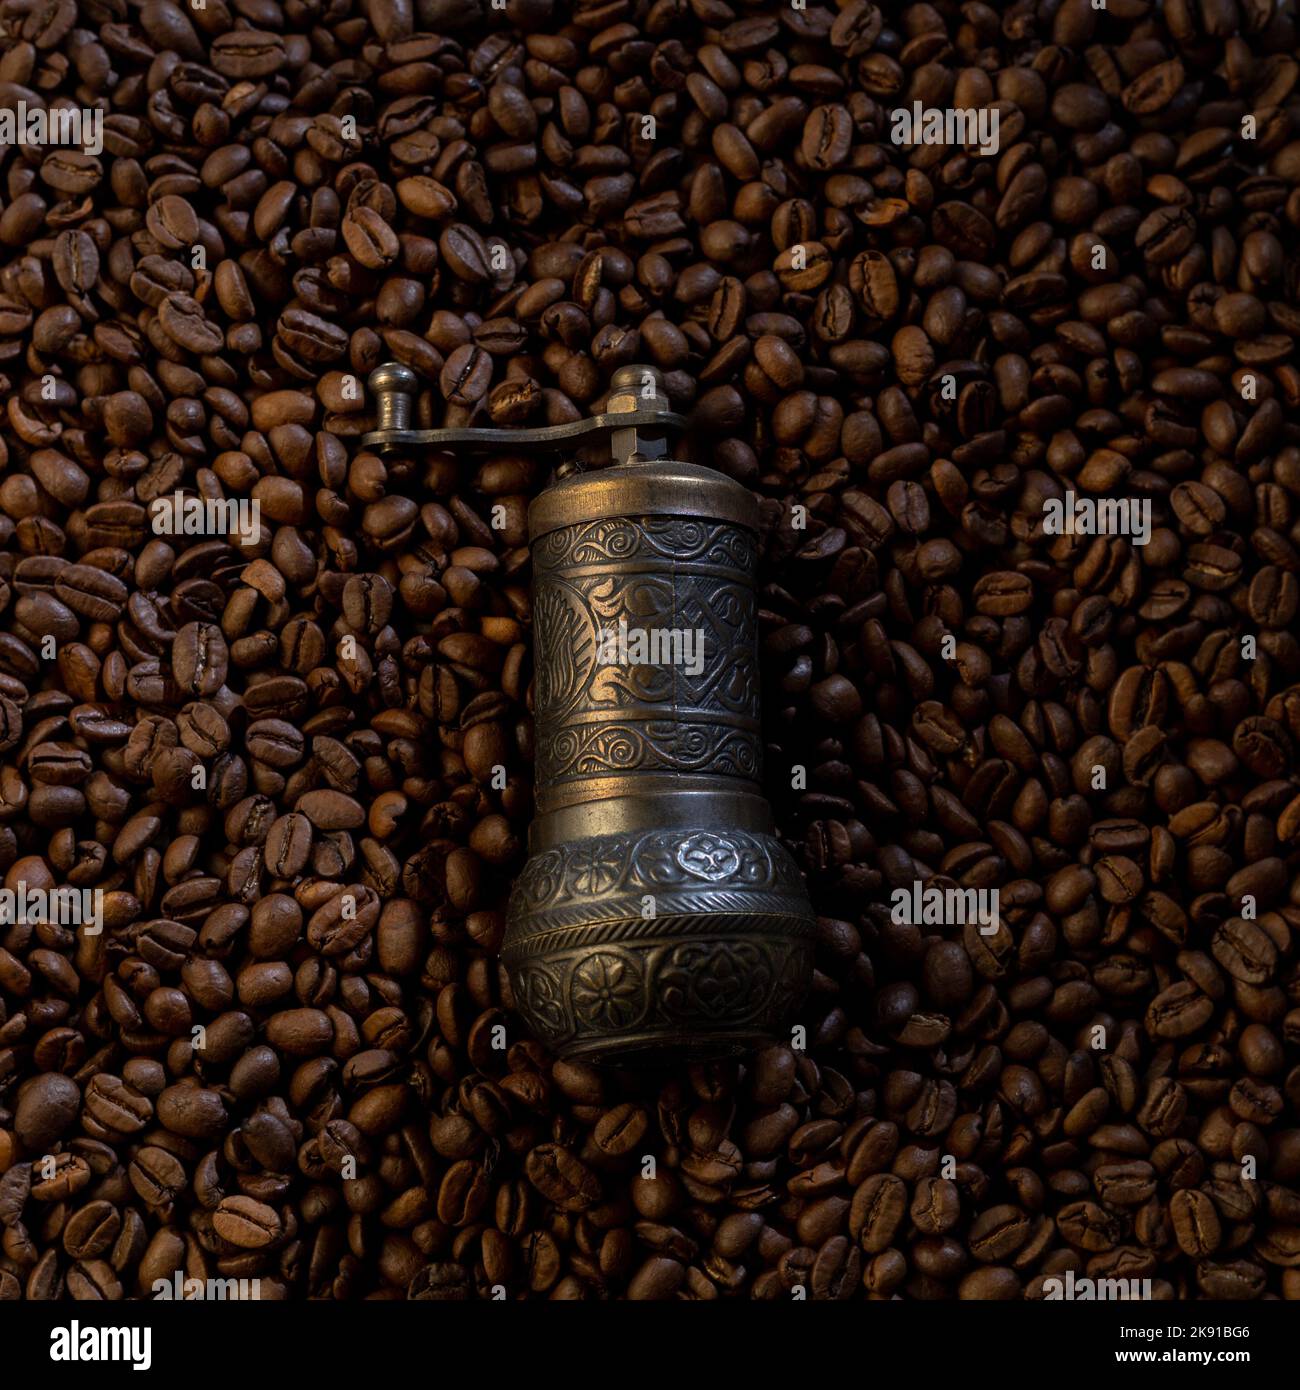 https://c8.alamy.com/comp/2K91BG6/manual-vintage-coffee-grinder-on-a-background-of-coffee-beans-2K91BG6.jpg